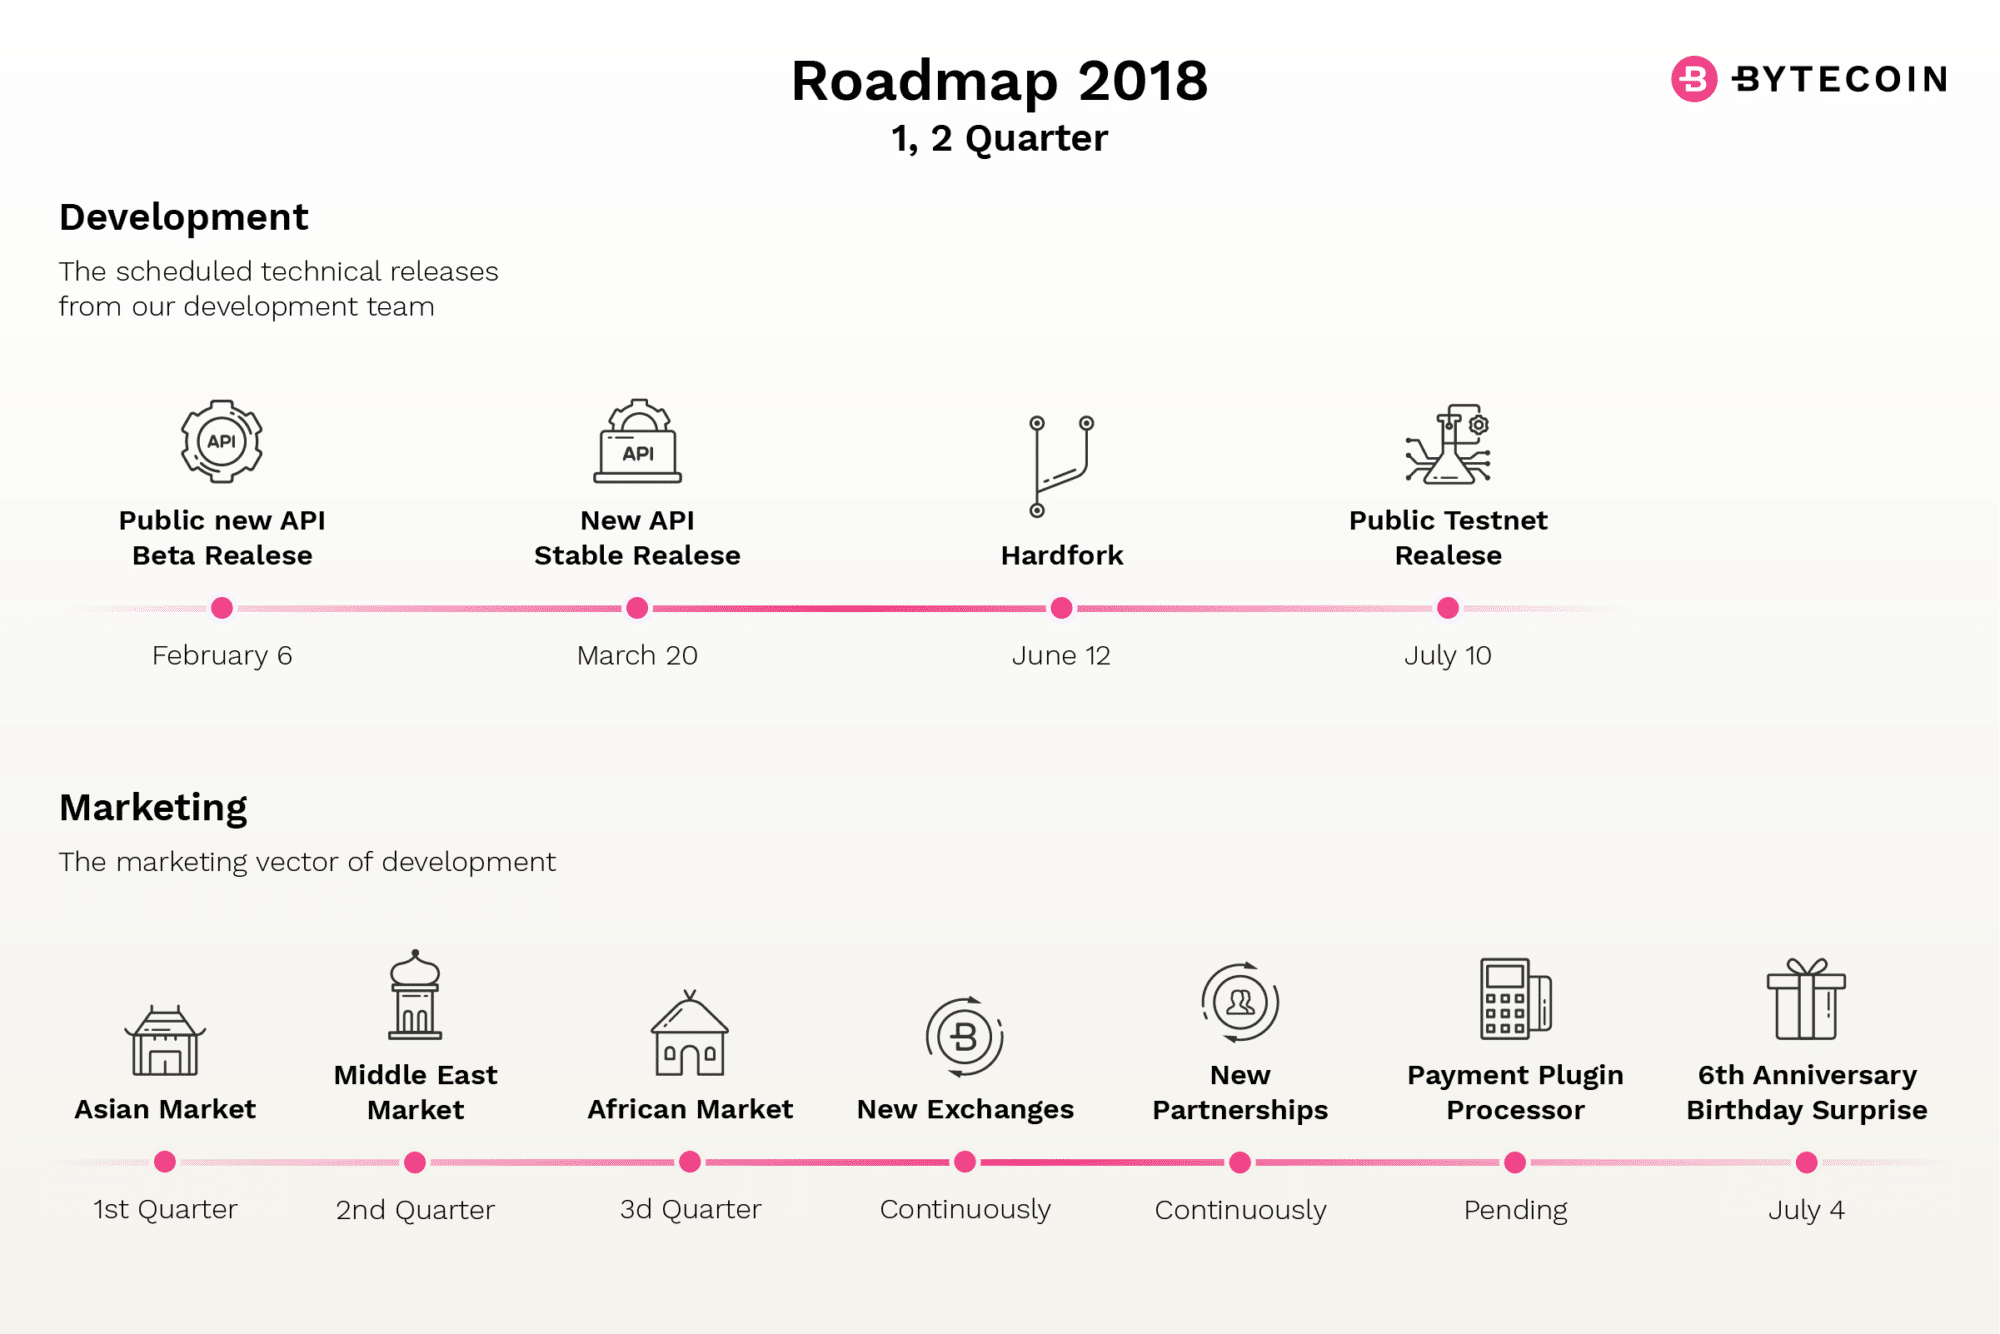 bytecoin roadmap